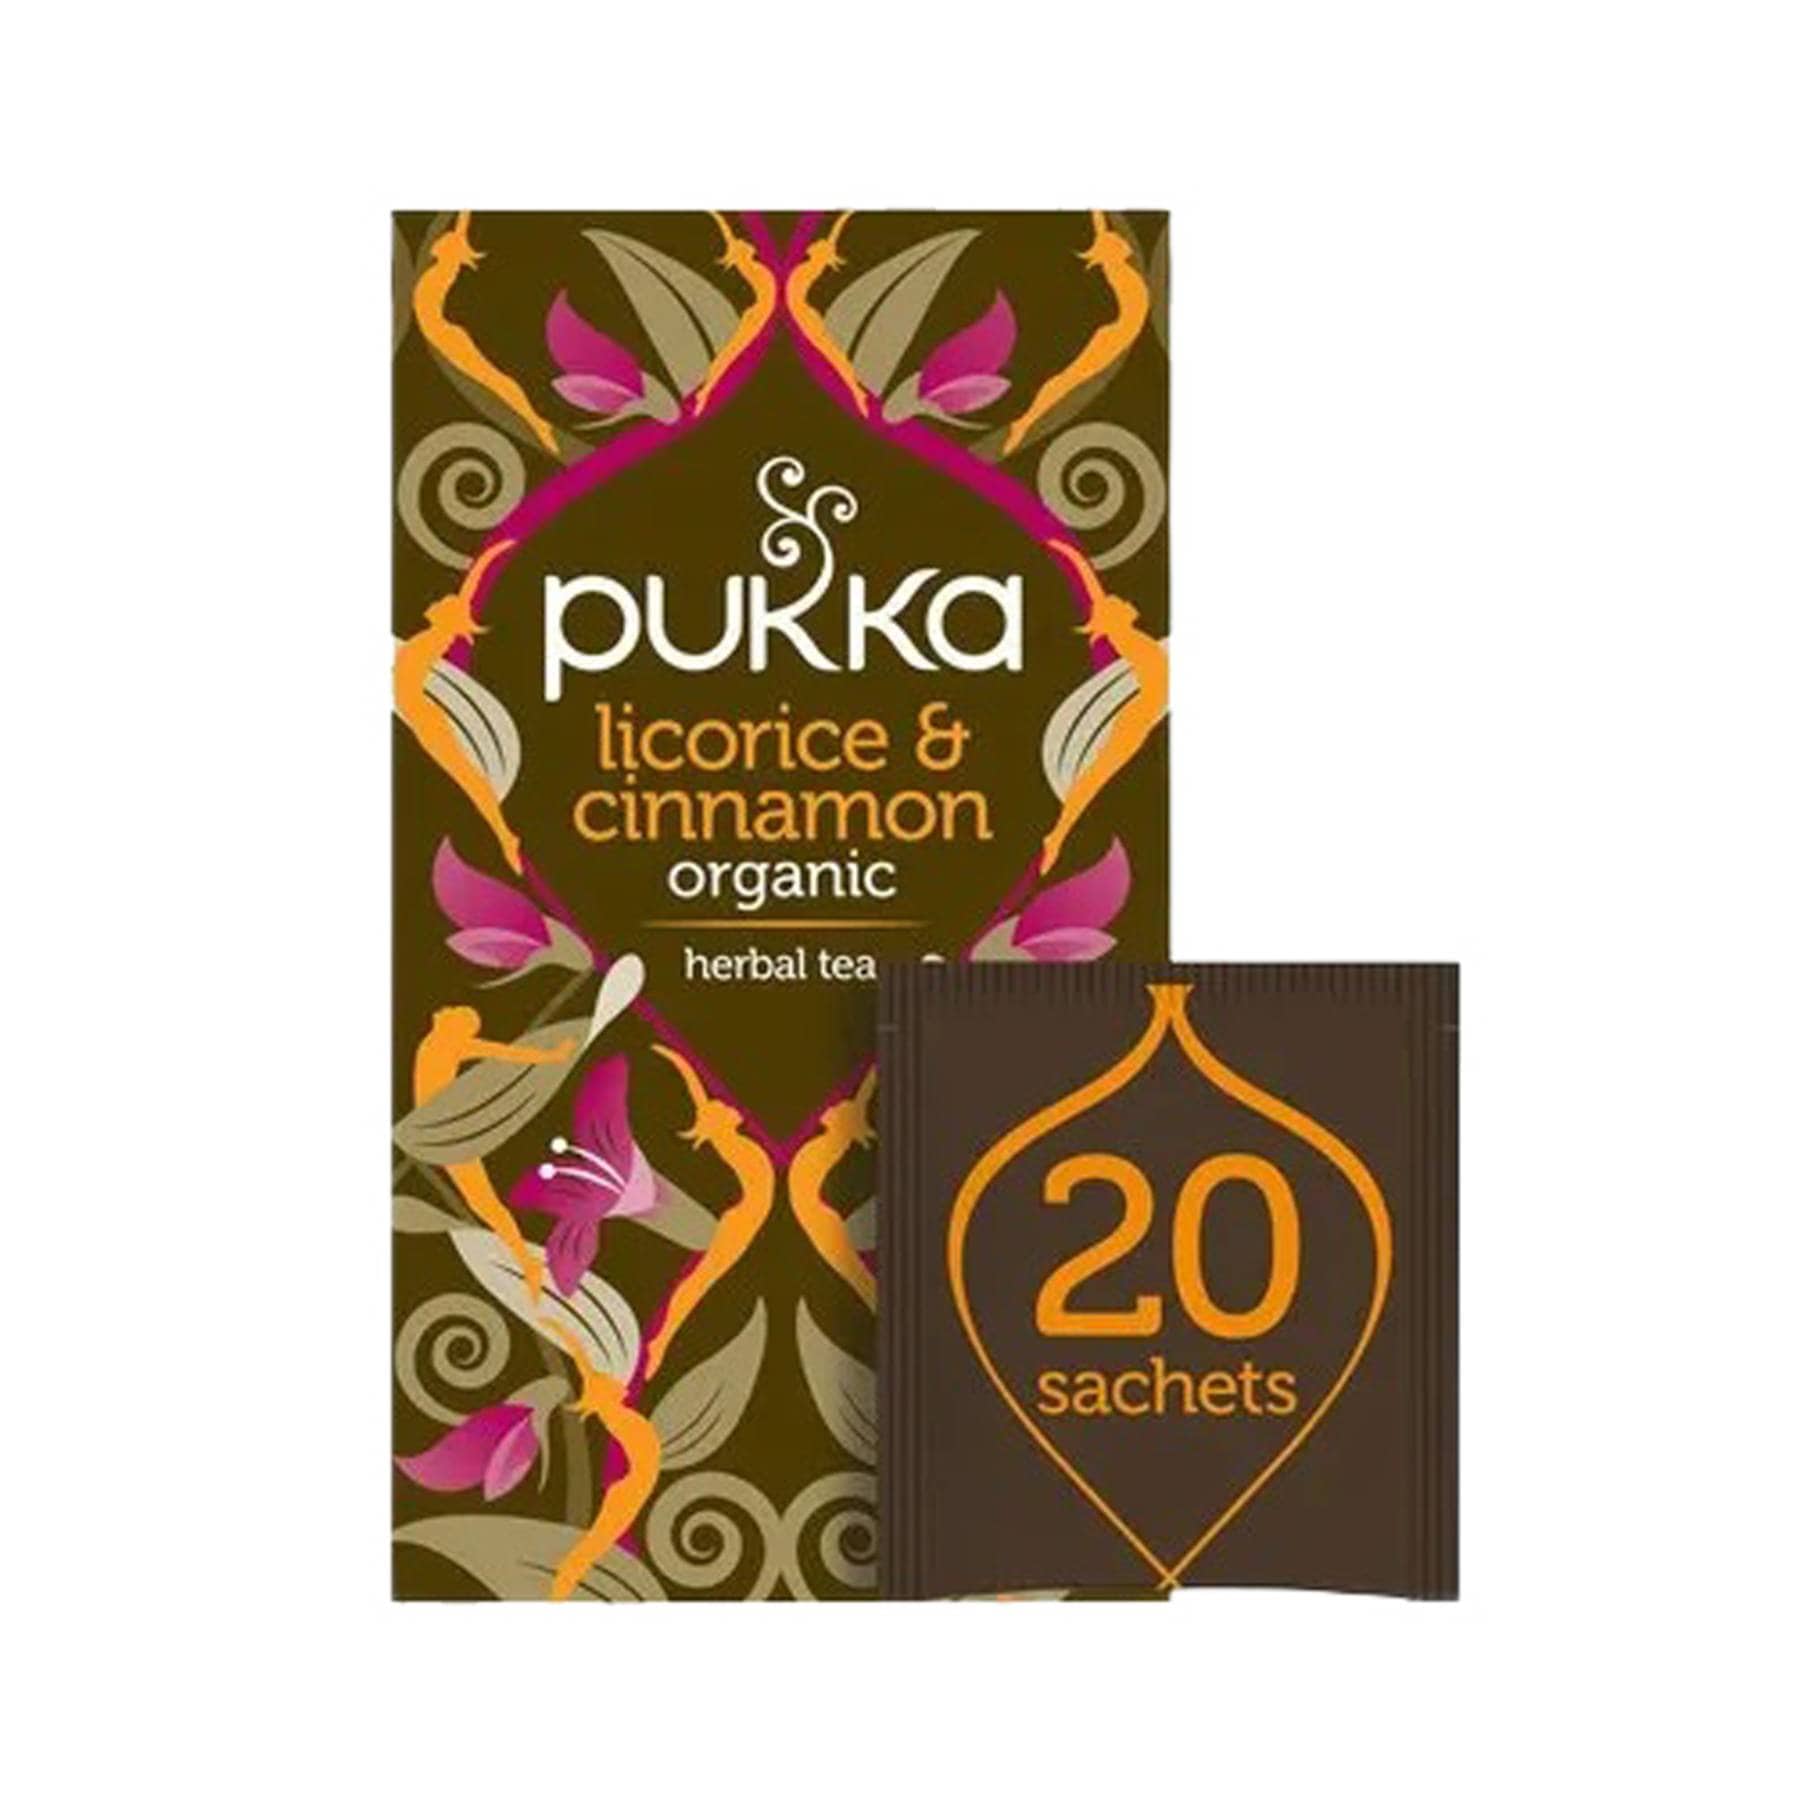 Pukka liquorice & cinnamon 20 tea bags